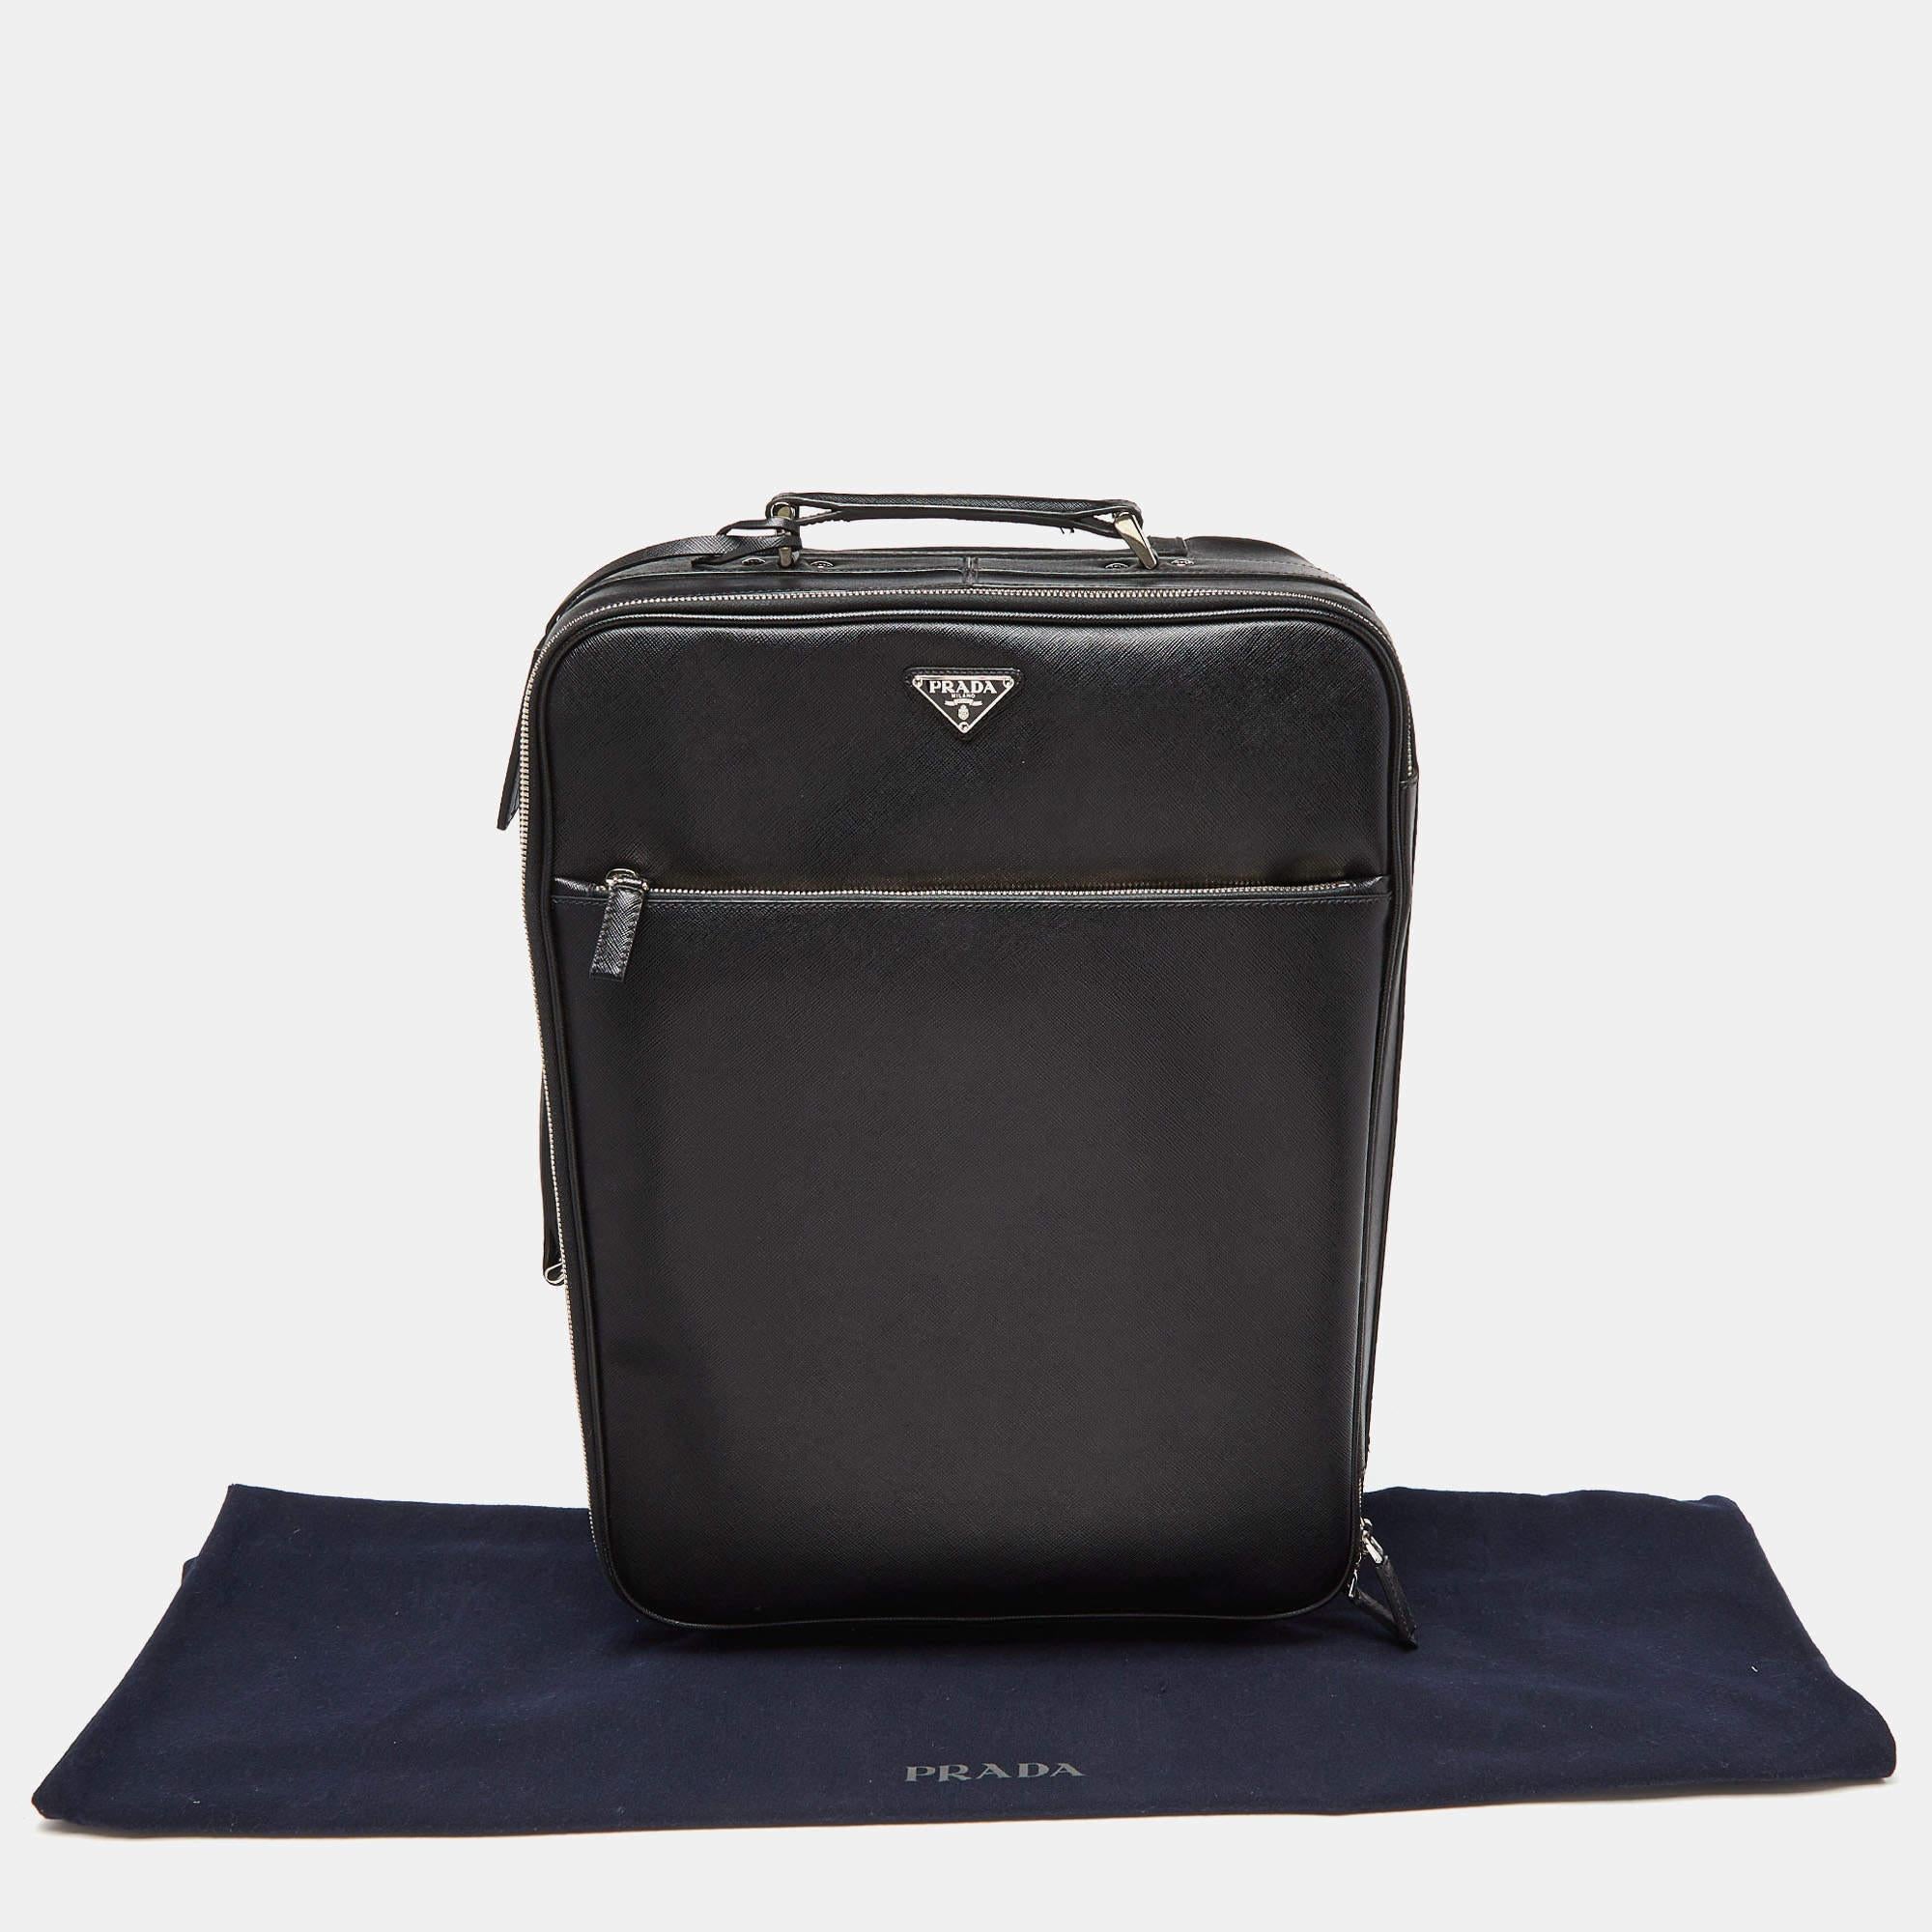 Prada Black Saffiano Leather Travel Rolling Trolley Luggage For Sale 3